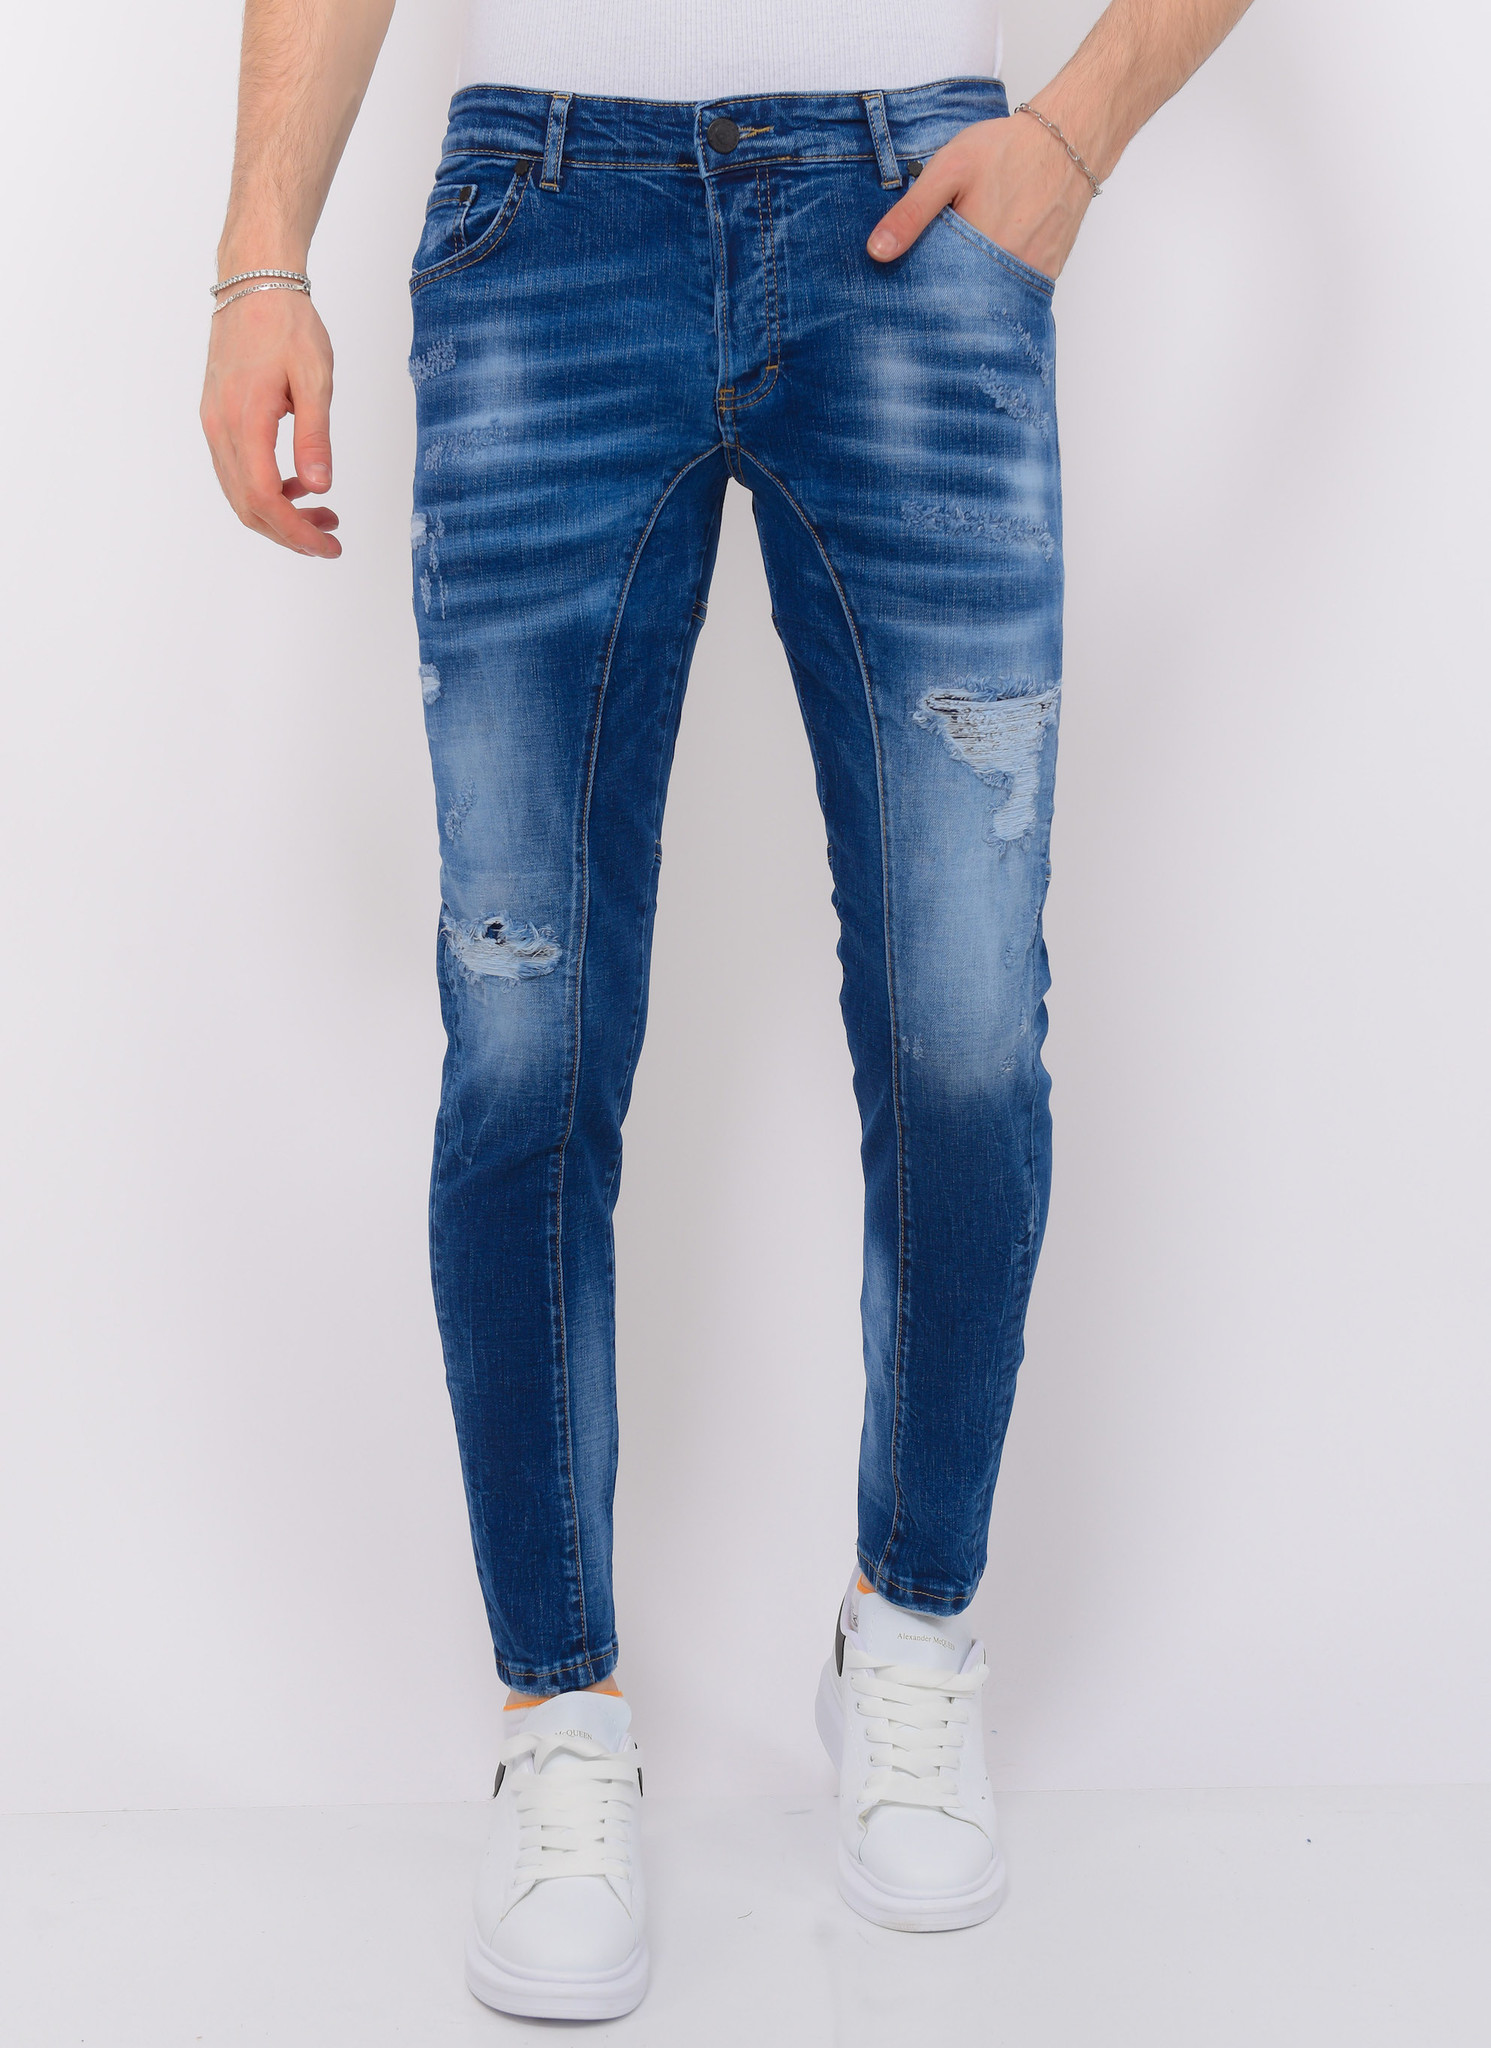 Leeg de prullenbak Avonturier Uitstekend Distressed Ripped Jeans Heren | New Collection | - Style Italy